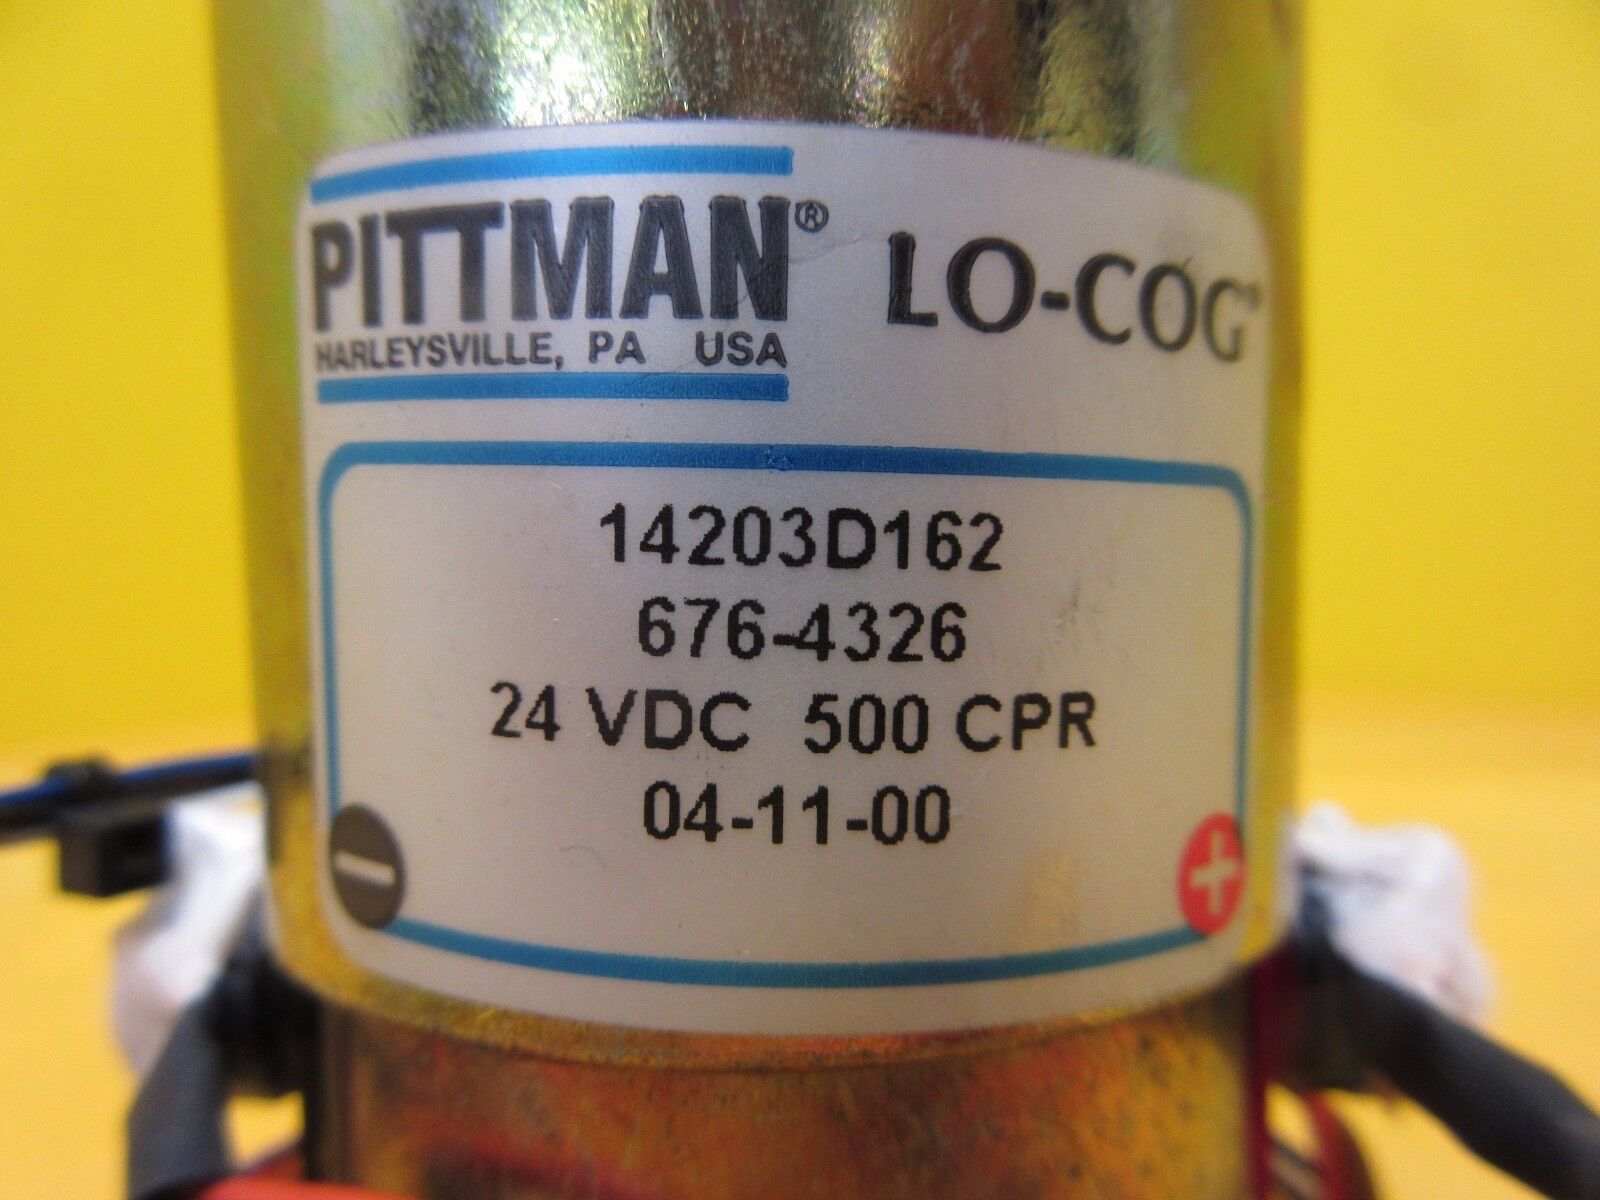 Pittman 14203D162 24V Servo Motor 676-4326 LO-COG with Gear Head Used Working